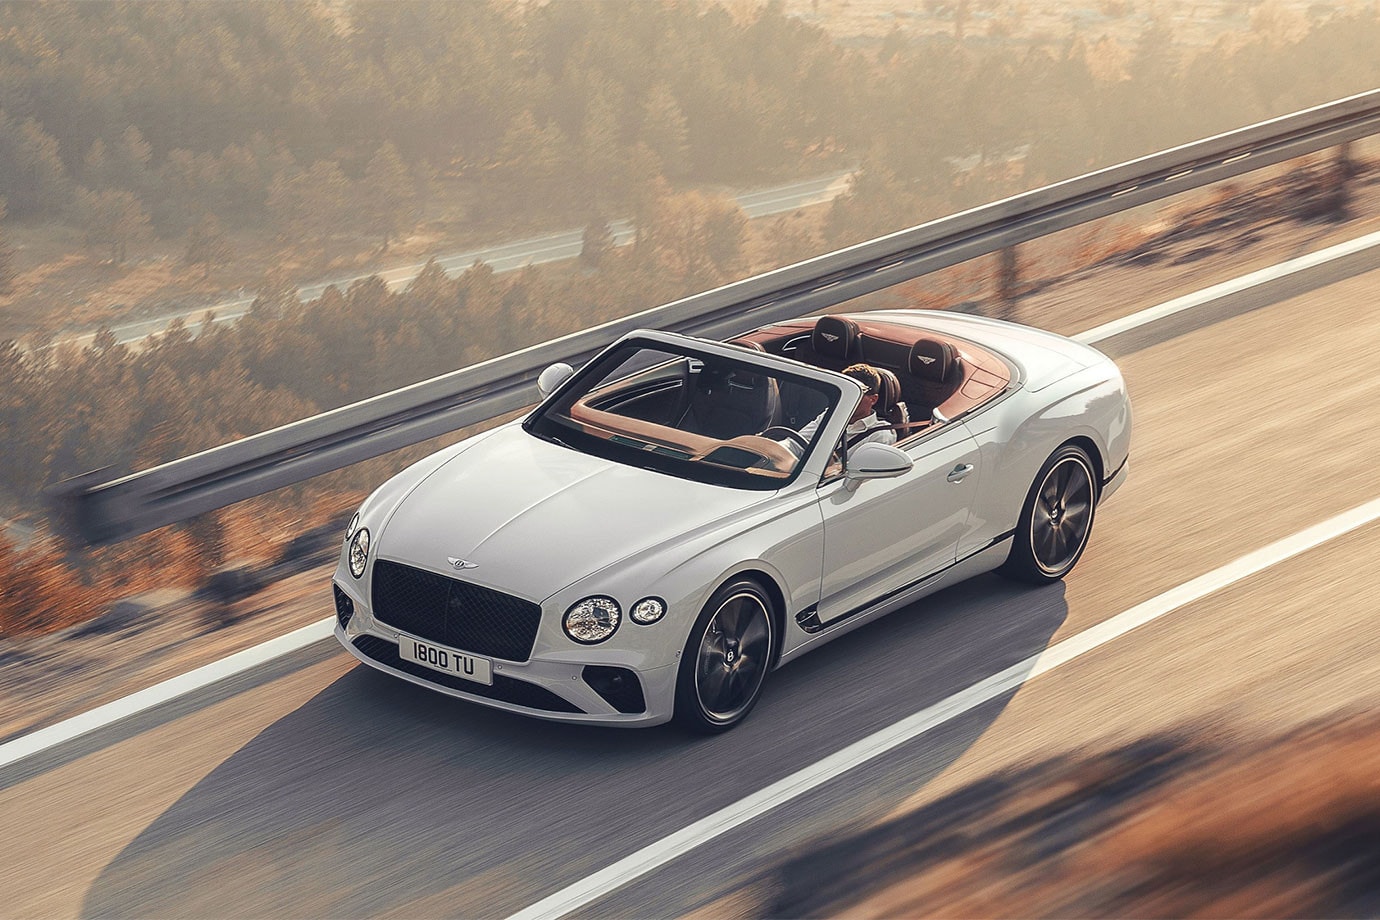 奢華上空 − Bentley 全新 2019 Continental GT Convertible 車型登場